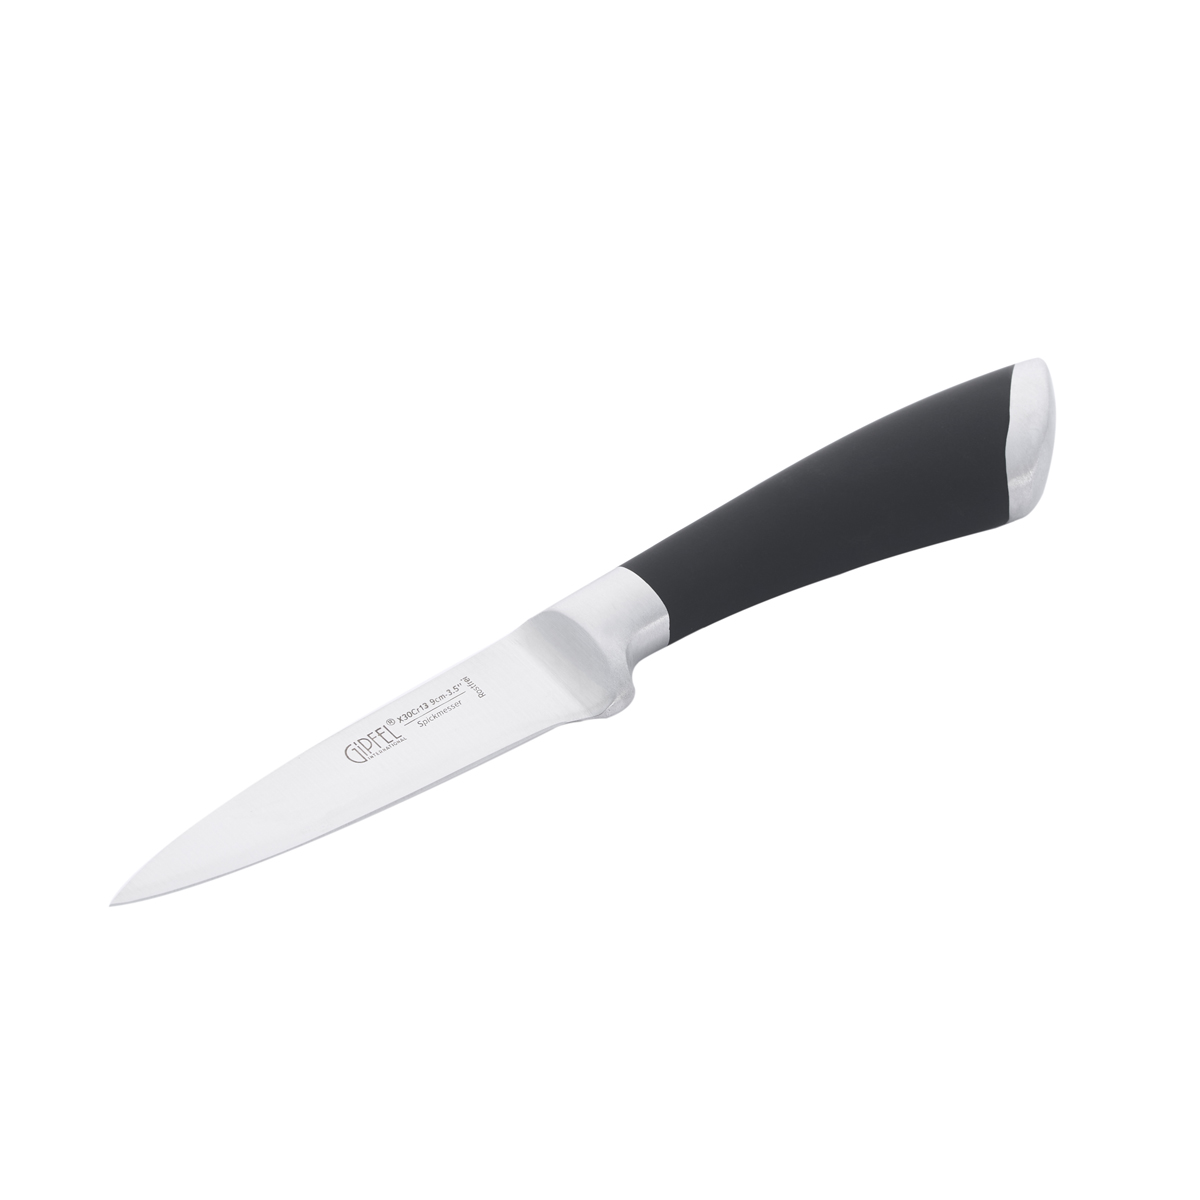 Нож для чистки овощей Gipfel Mirella 6840 9 см нож поварской gipfel mirella 6836 20 см